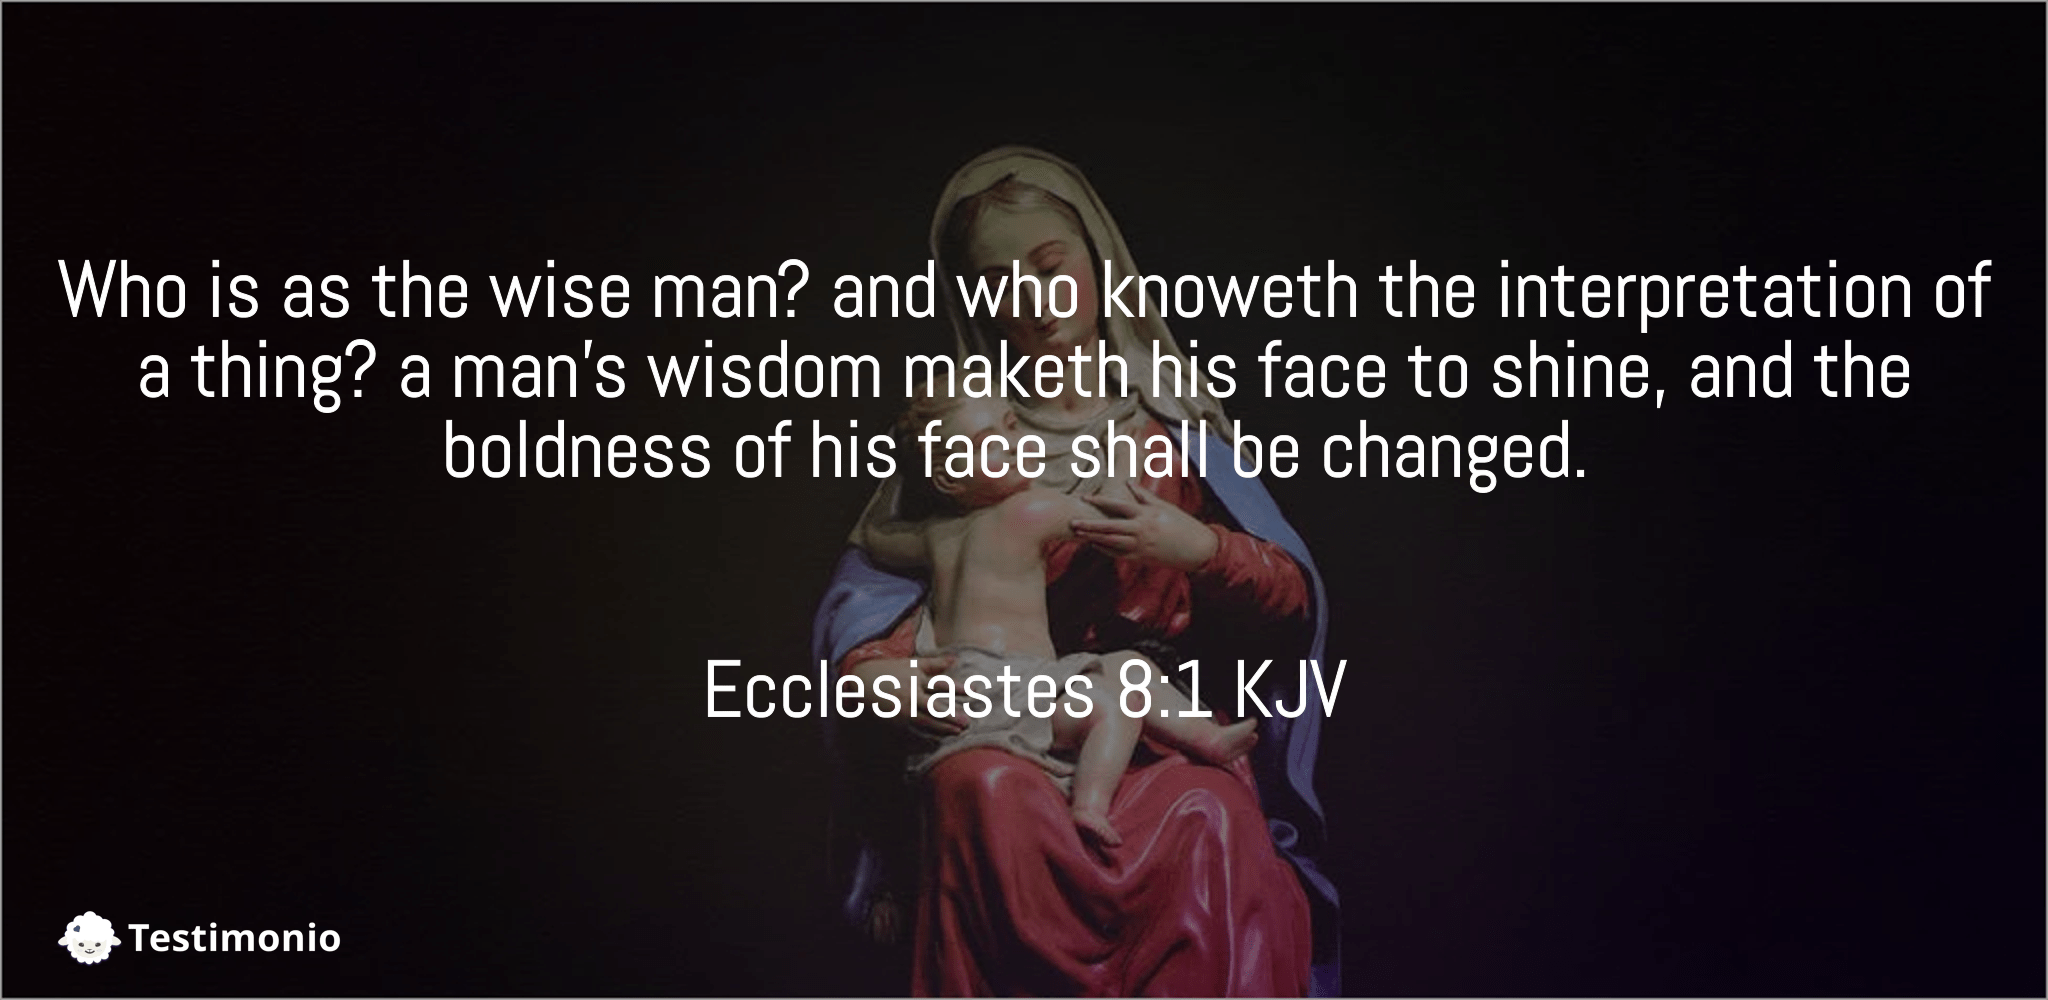 Ecclesiastes 8:1